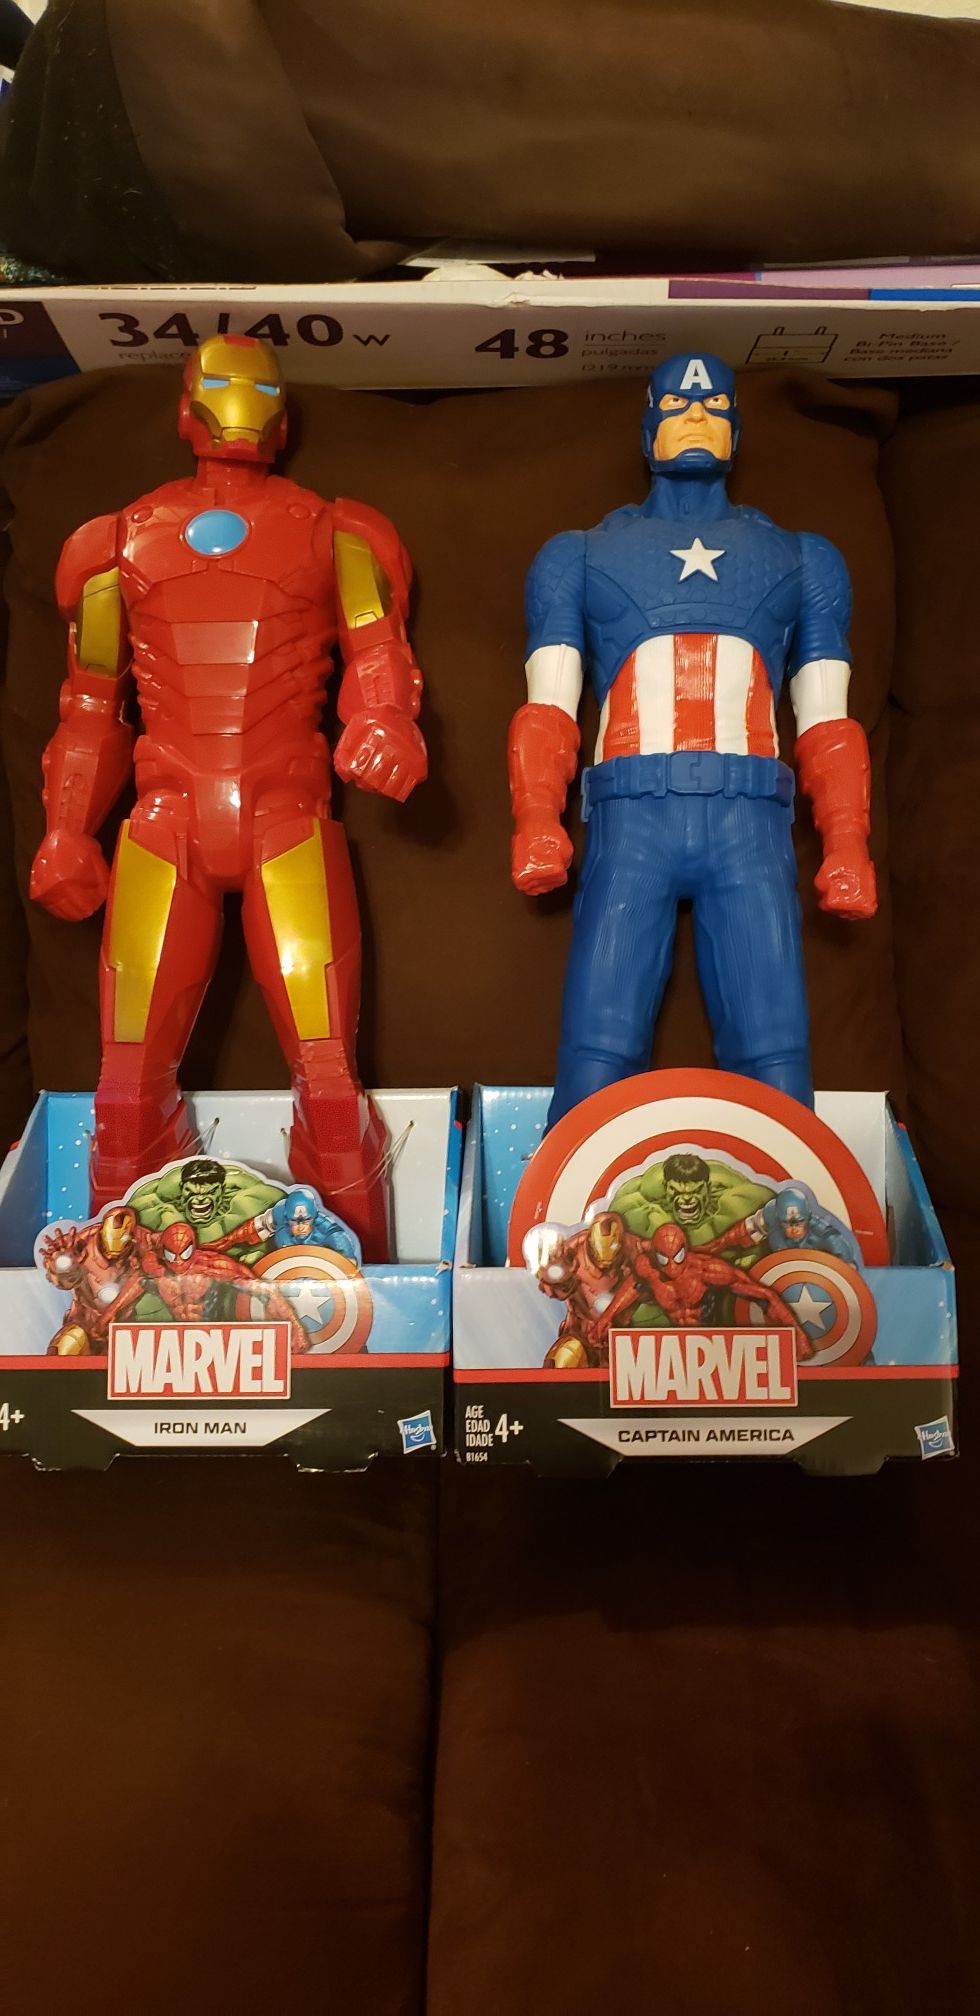 Iron Man & Captain America figures